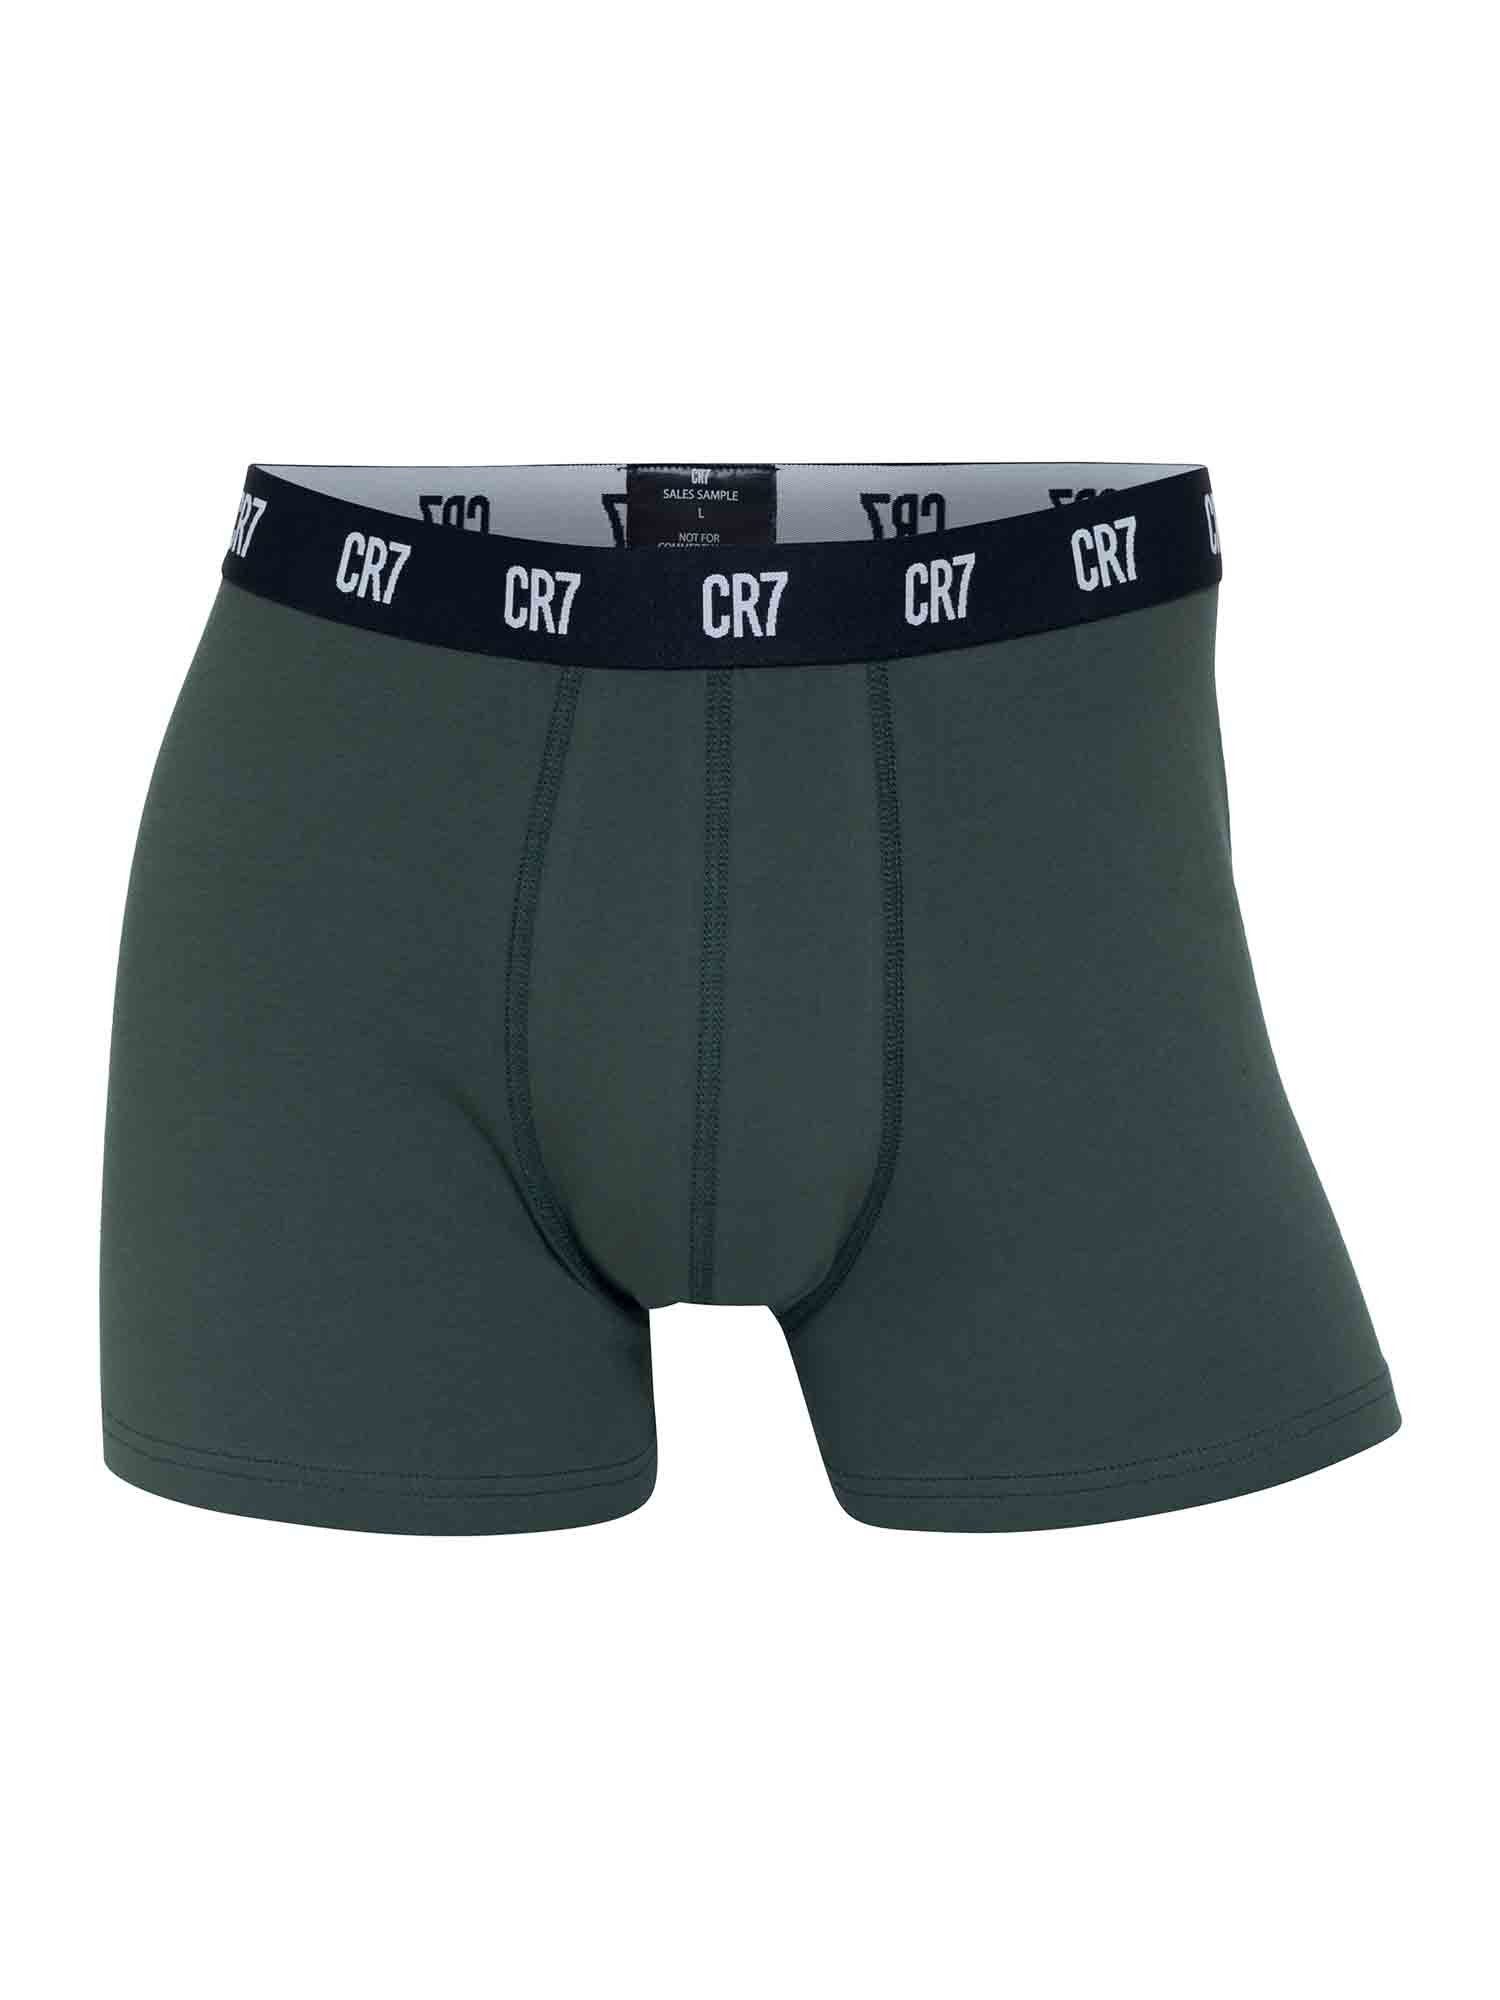 Multi (3-St) Männer 28 Retro Herren CR7 Boxershorts Retro Pants Pants Trunks Multipack